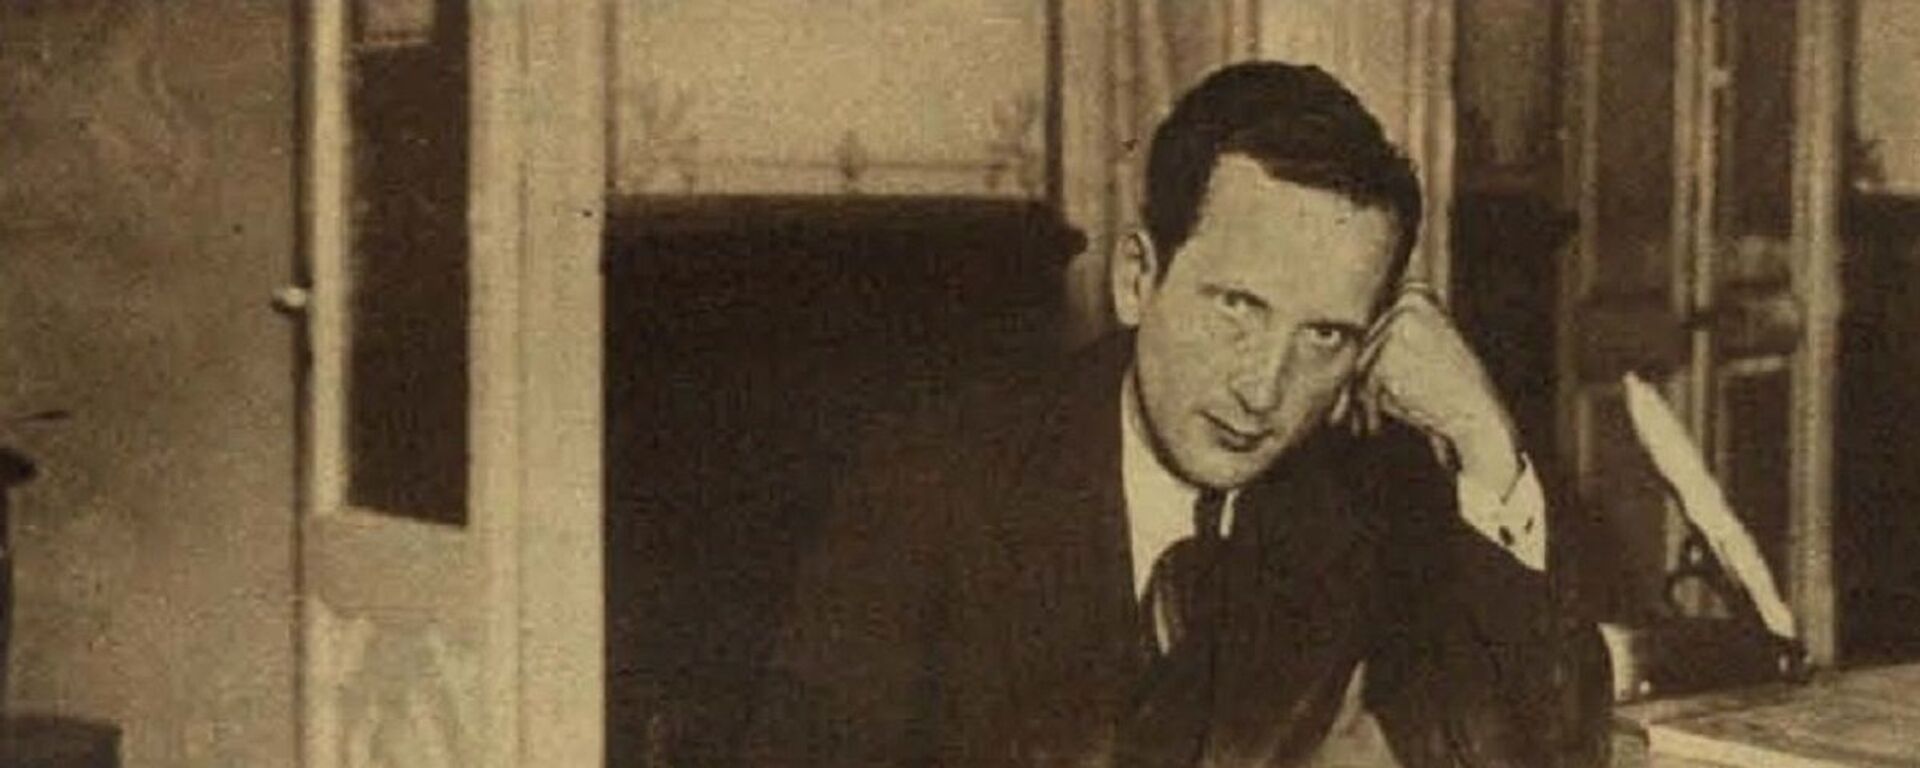 Boris Skósirev en el hotel Mundial de Seo de Urgel, en España - Sputnik Mundo, 1920, 25.01.2021